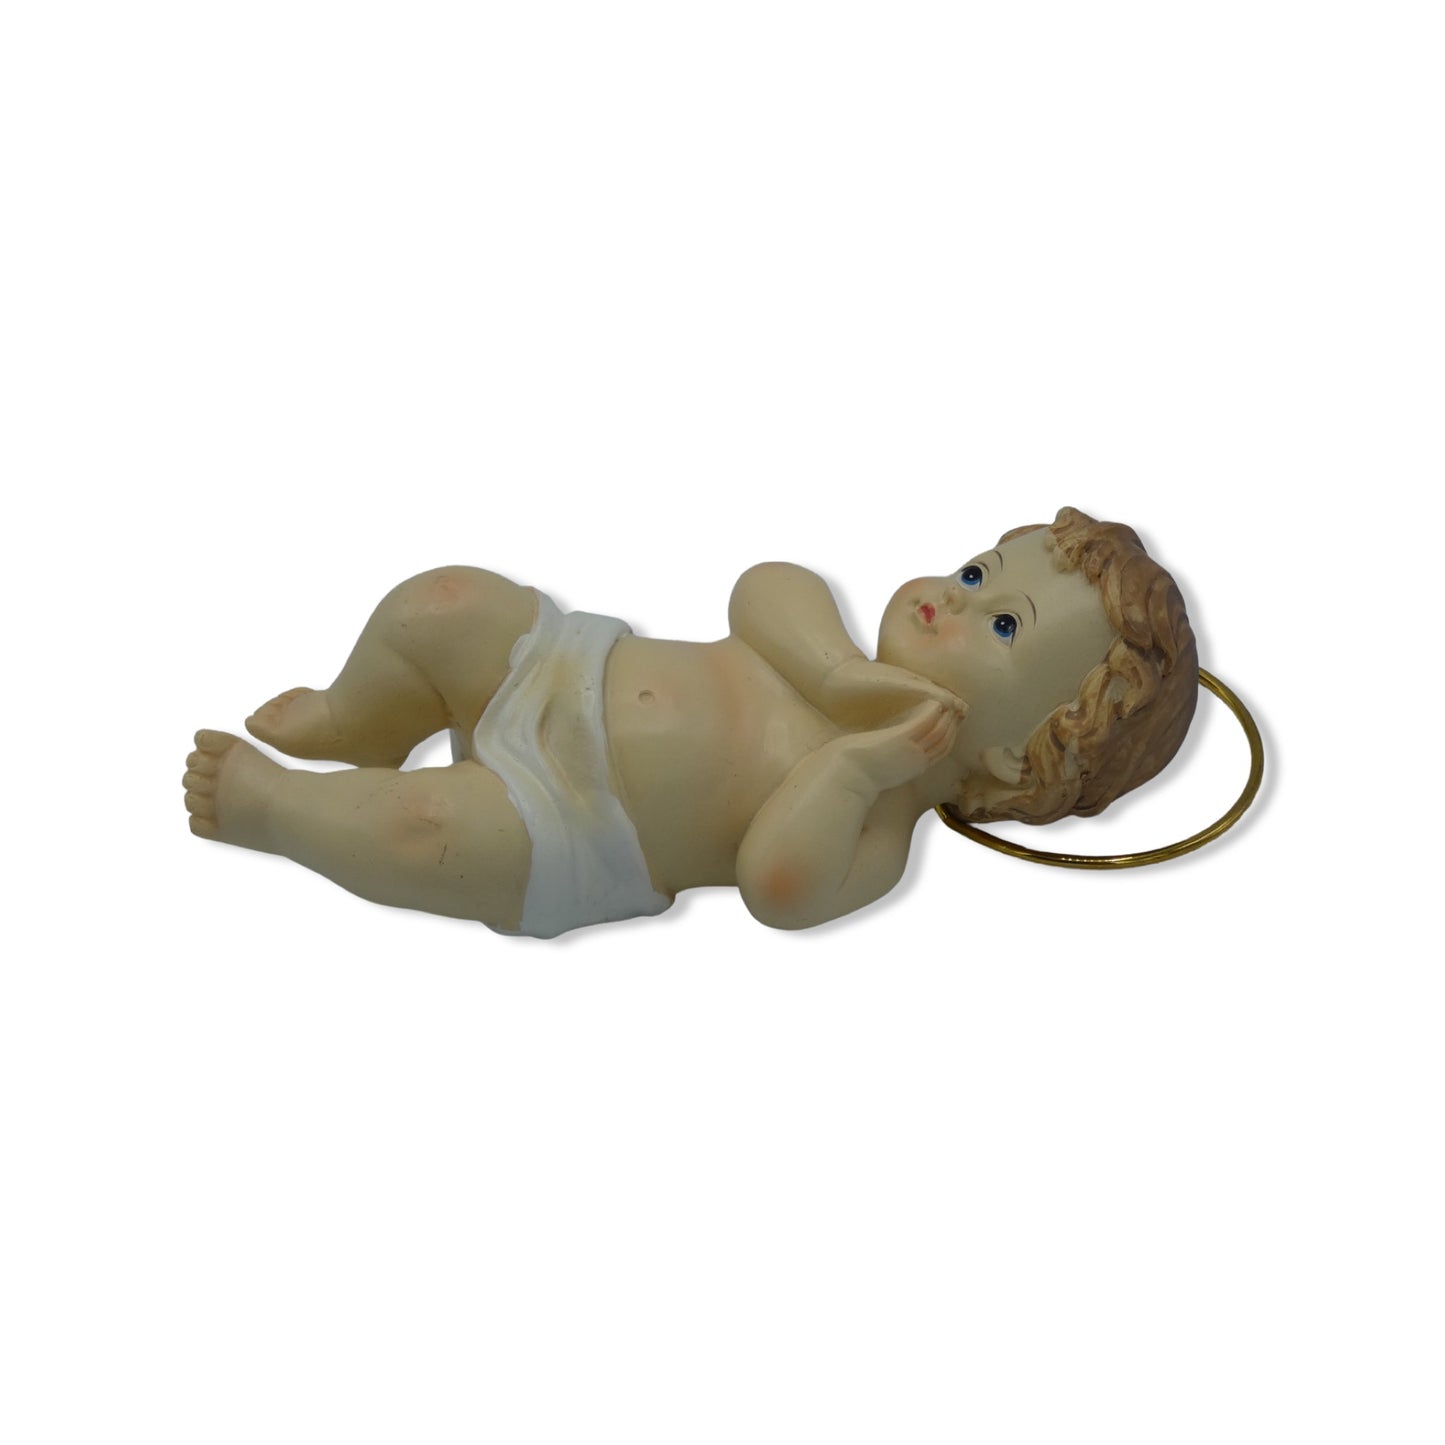 Baby Jesus Statue